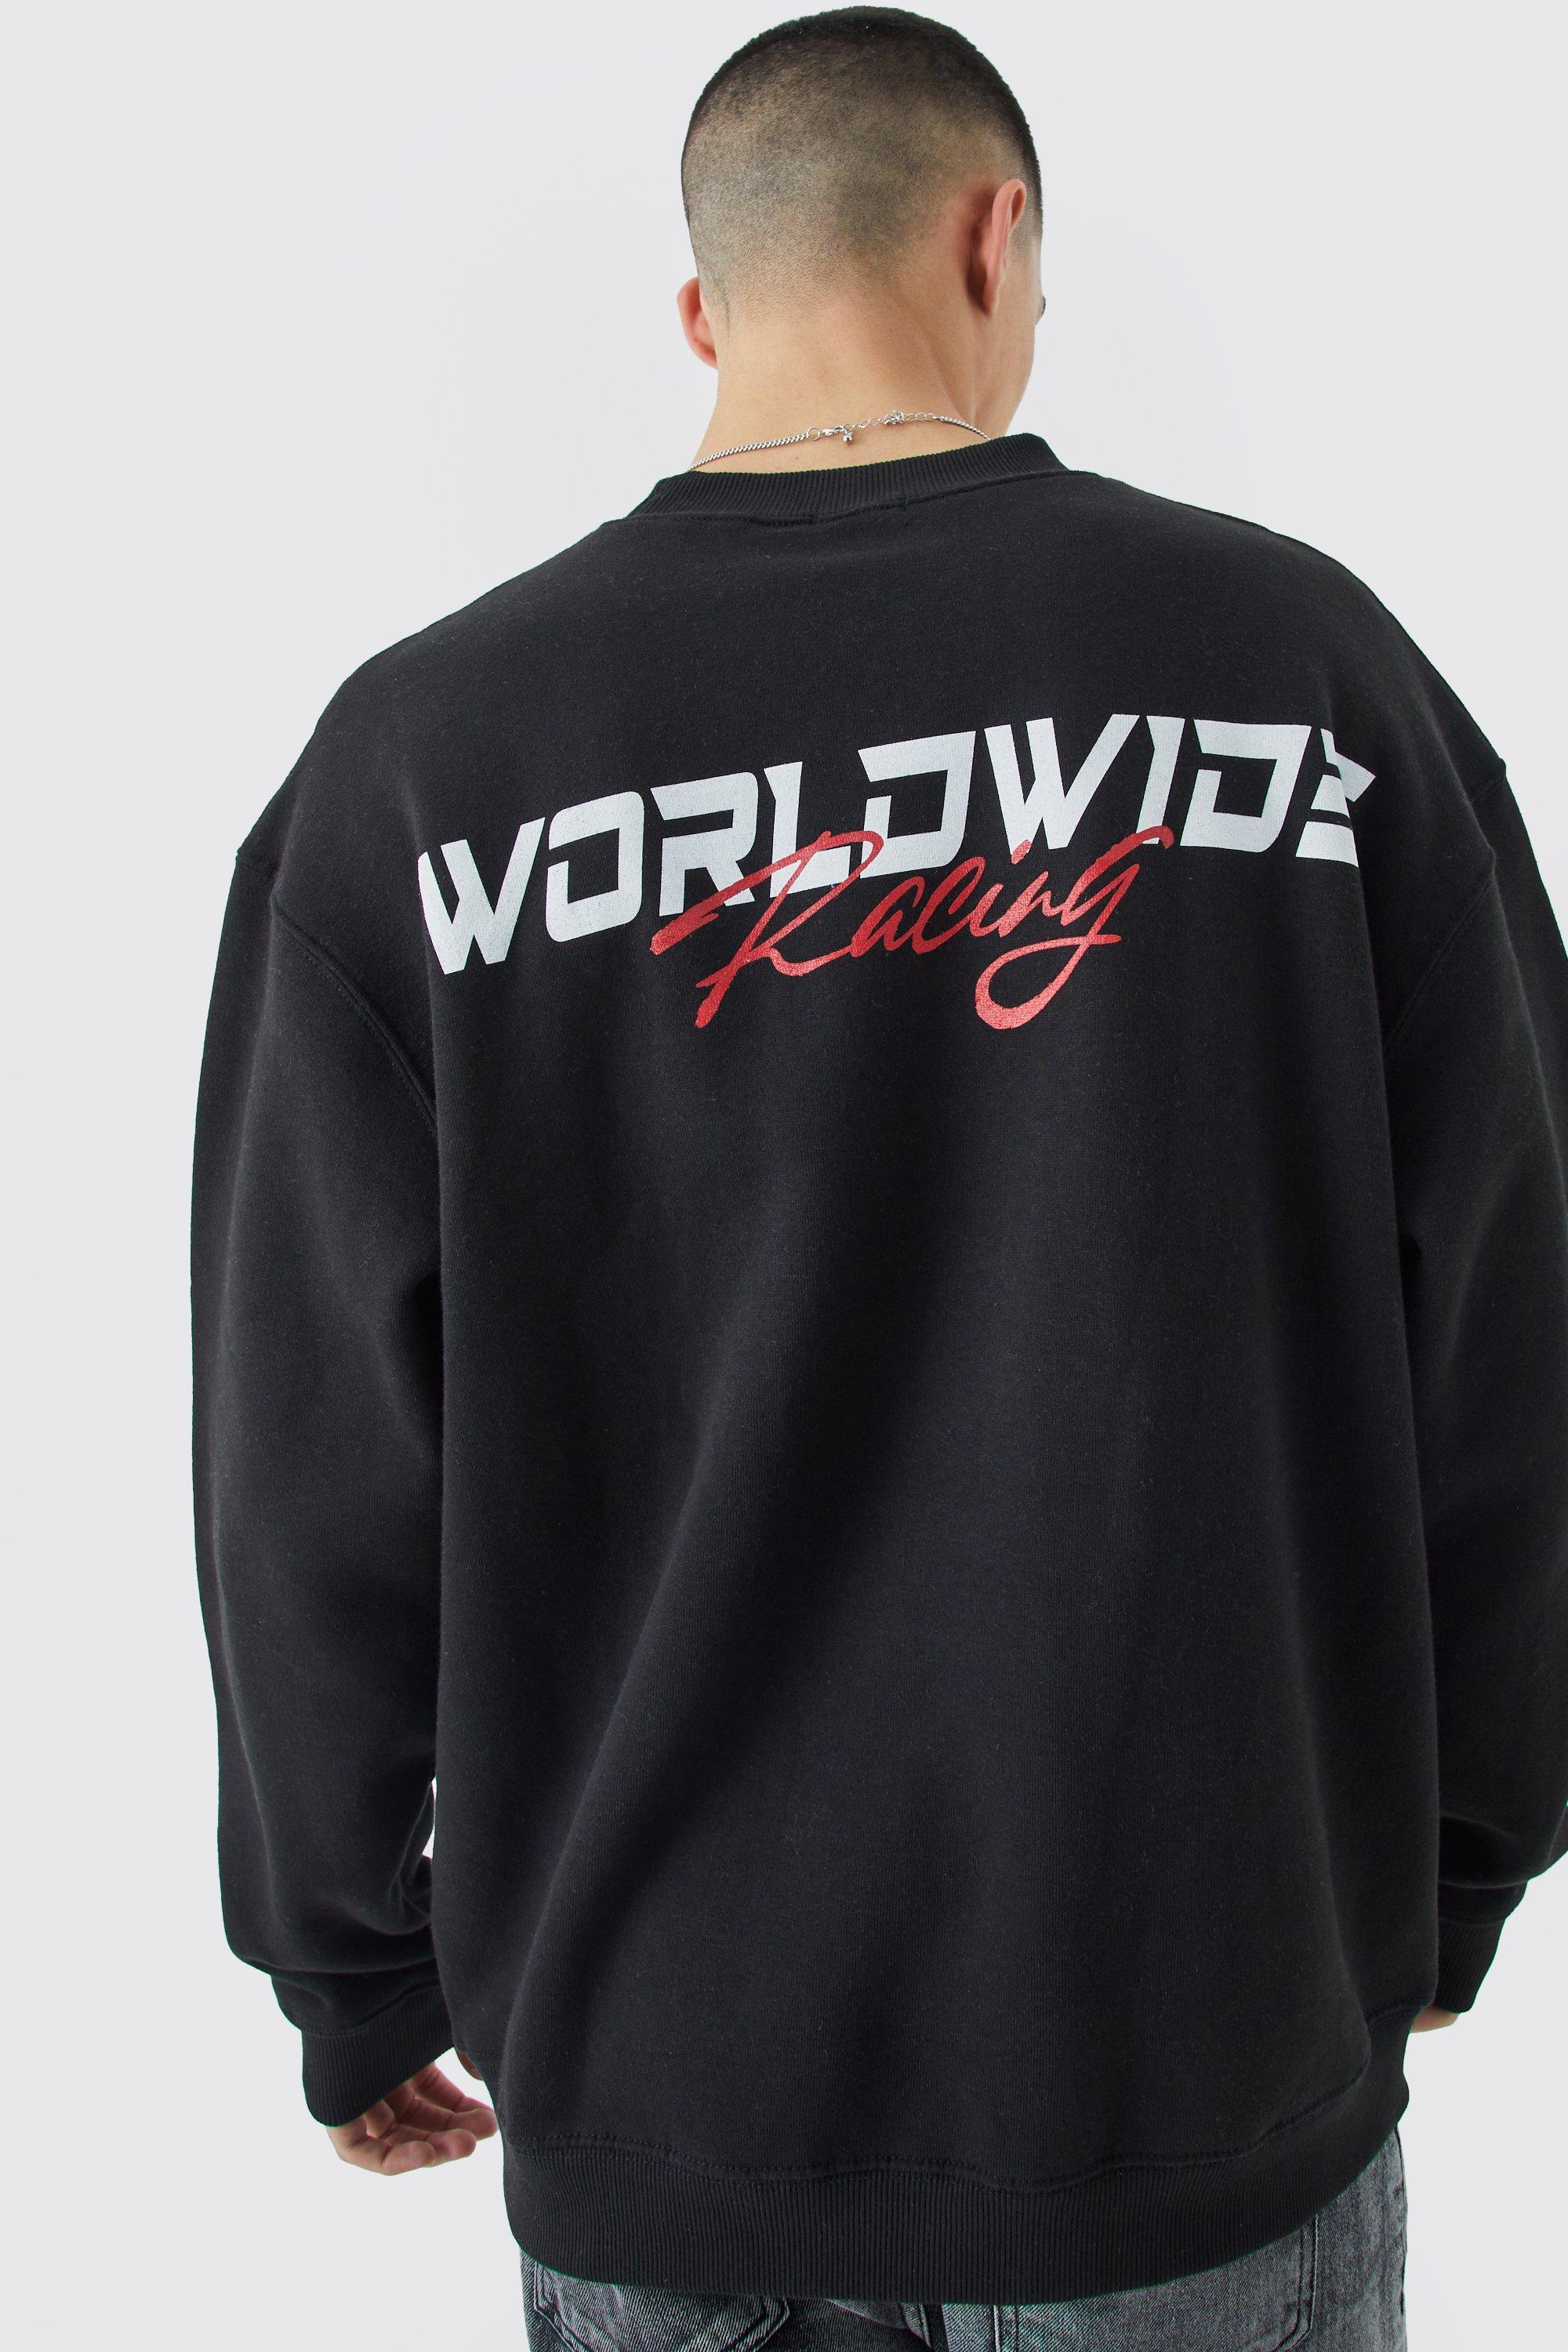 Mens Black Oversized Worldwide Graphic Extended Neck Sweatshirt, Black